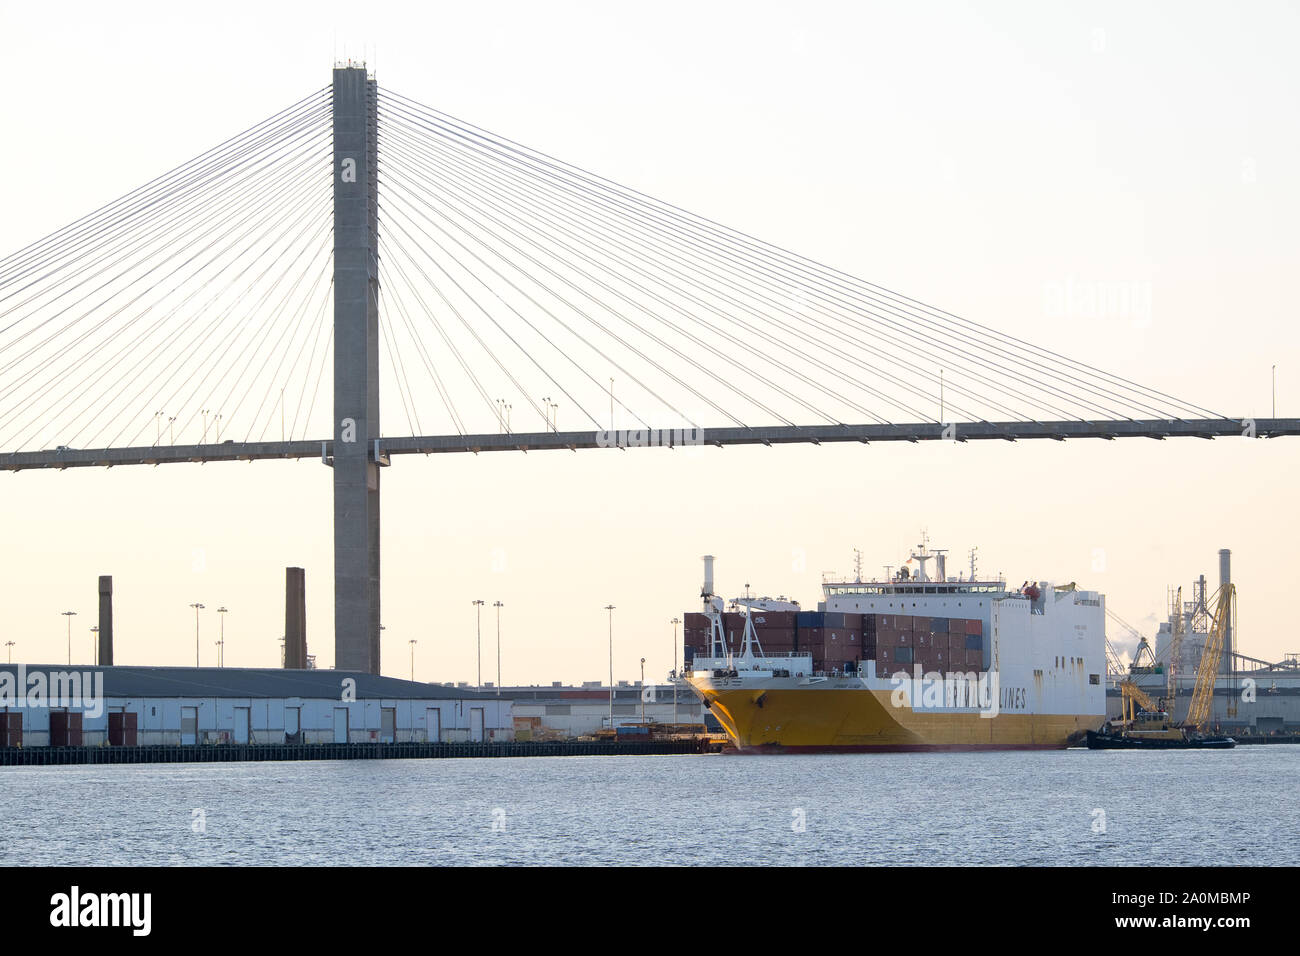 A large ocean vessel departs from the port of Savannah, GA as it navigates the Savannah River towards the Atlantic. Stock Photo